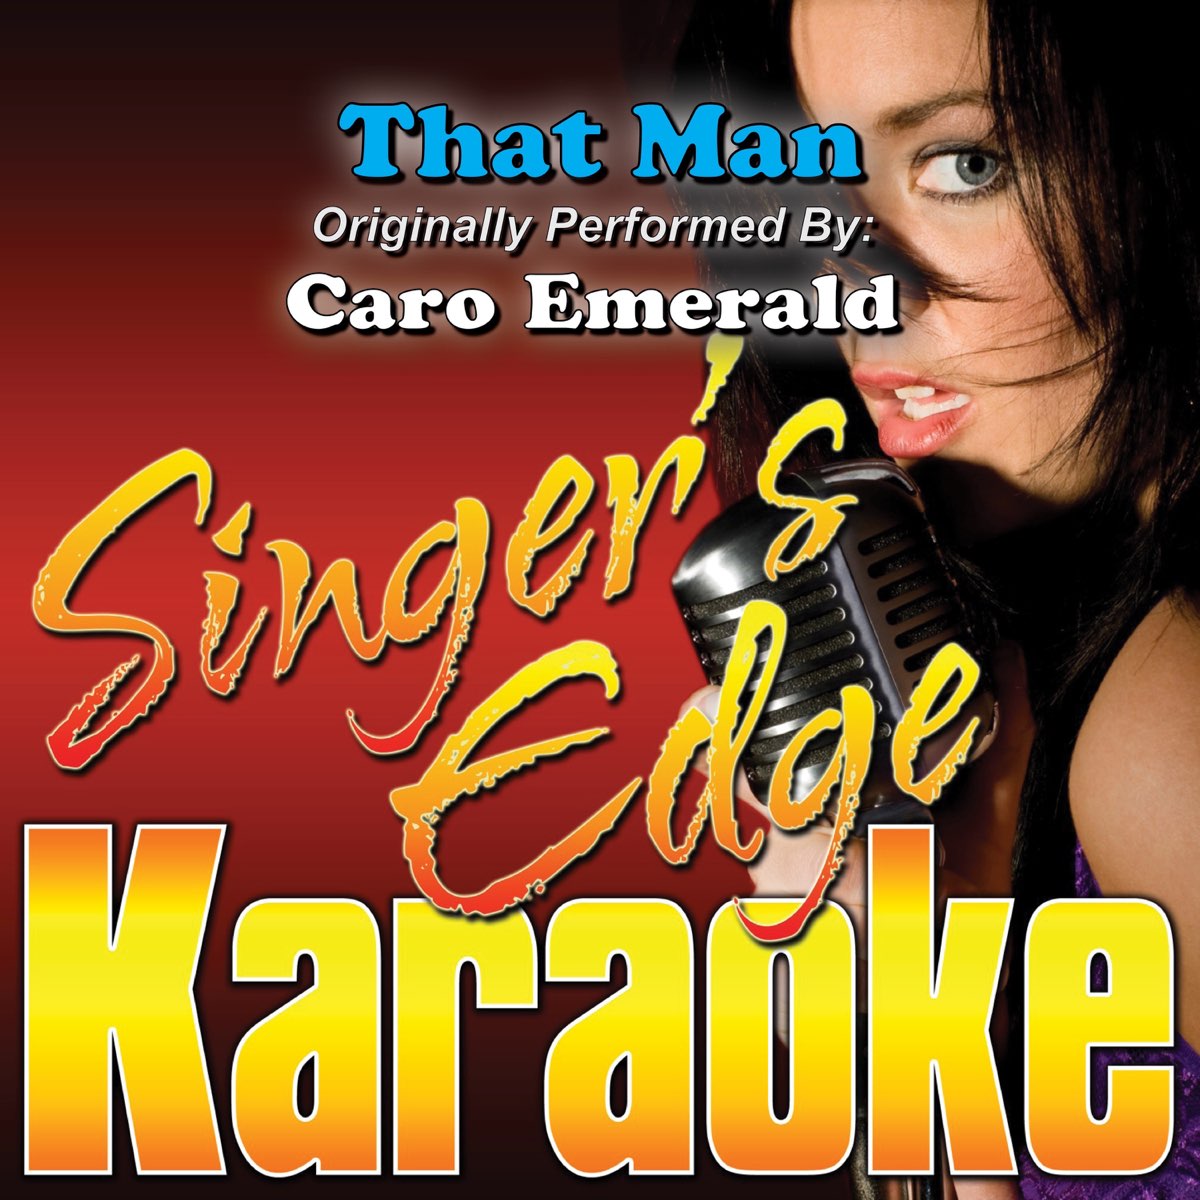 That Man (Originally Performed By Caro Emerald) [Karaoke Version] - Single  - Album by Singer's Edge Karaoke - Apple Music